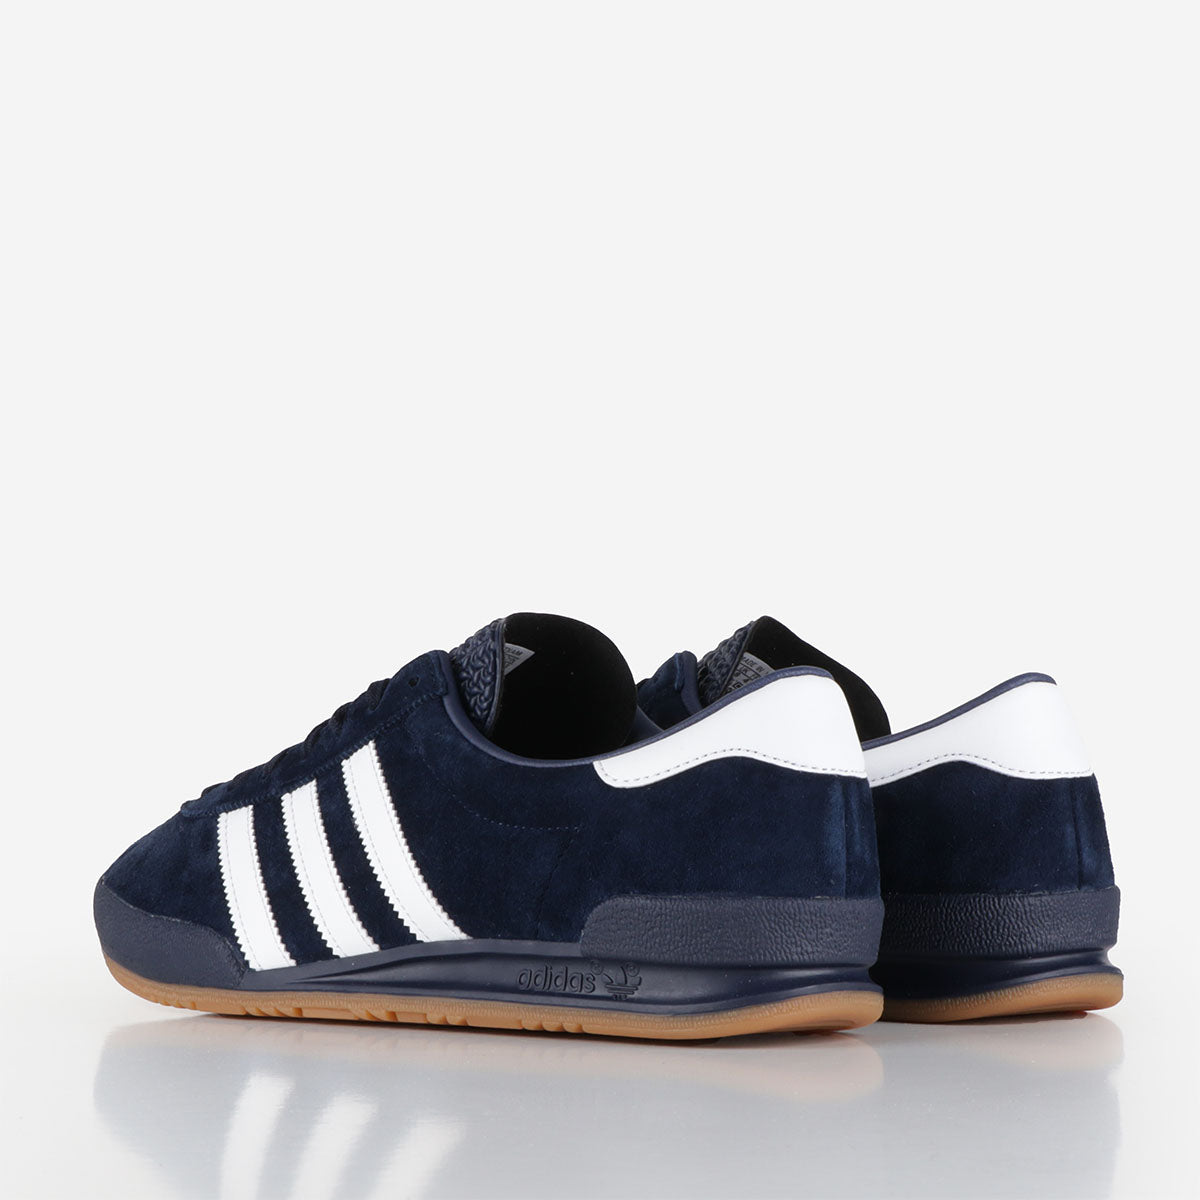 Adidas Originals MKII Shoes - Collegiate Navy/Legend Ink/Ftwr